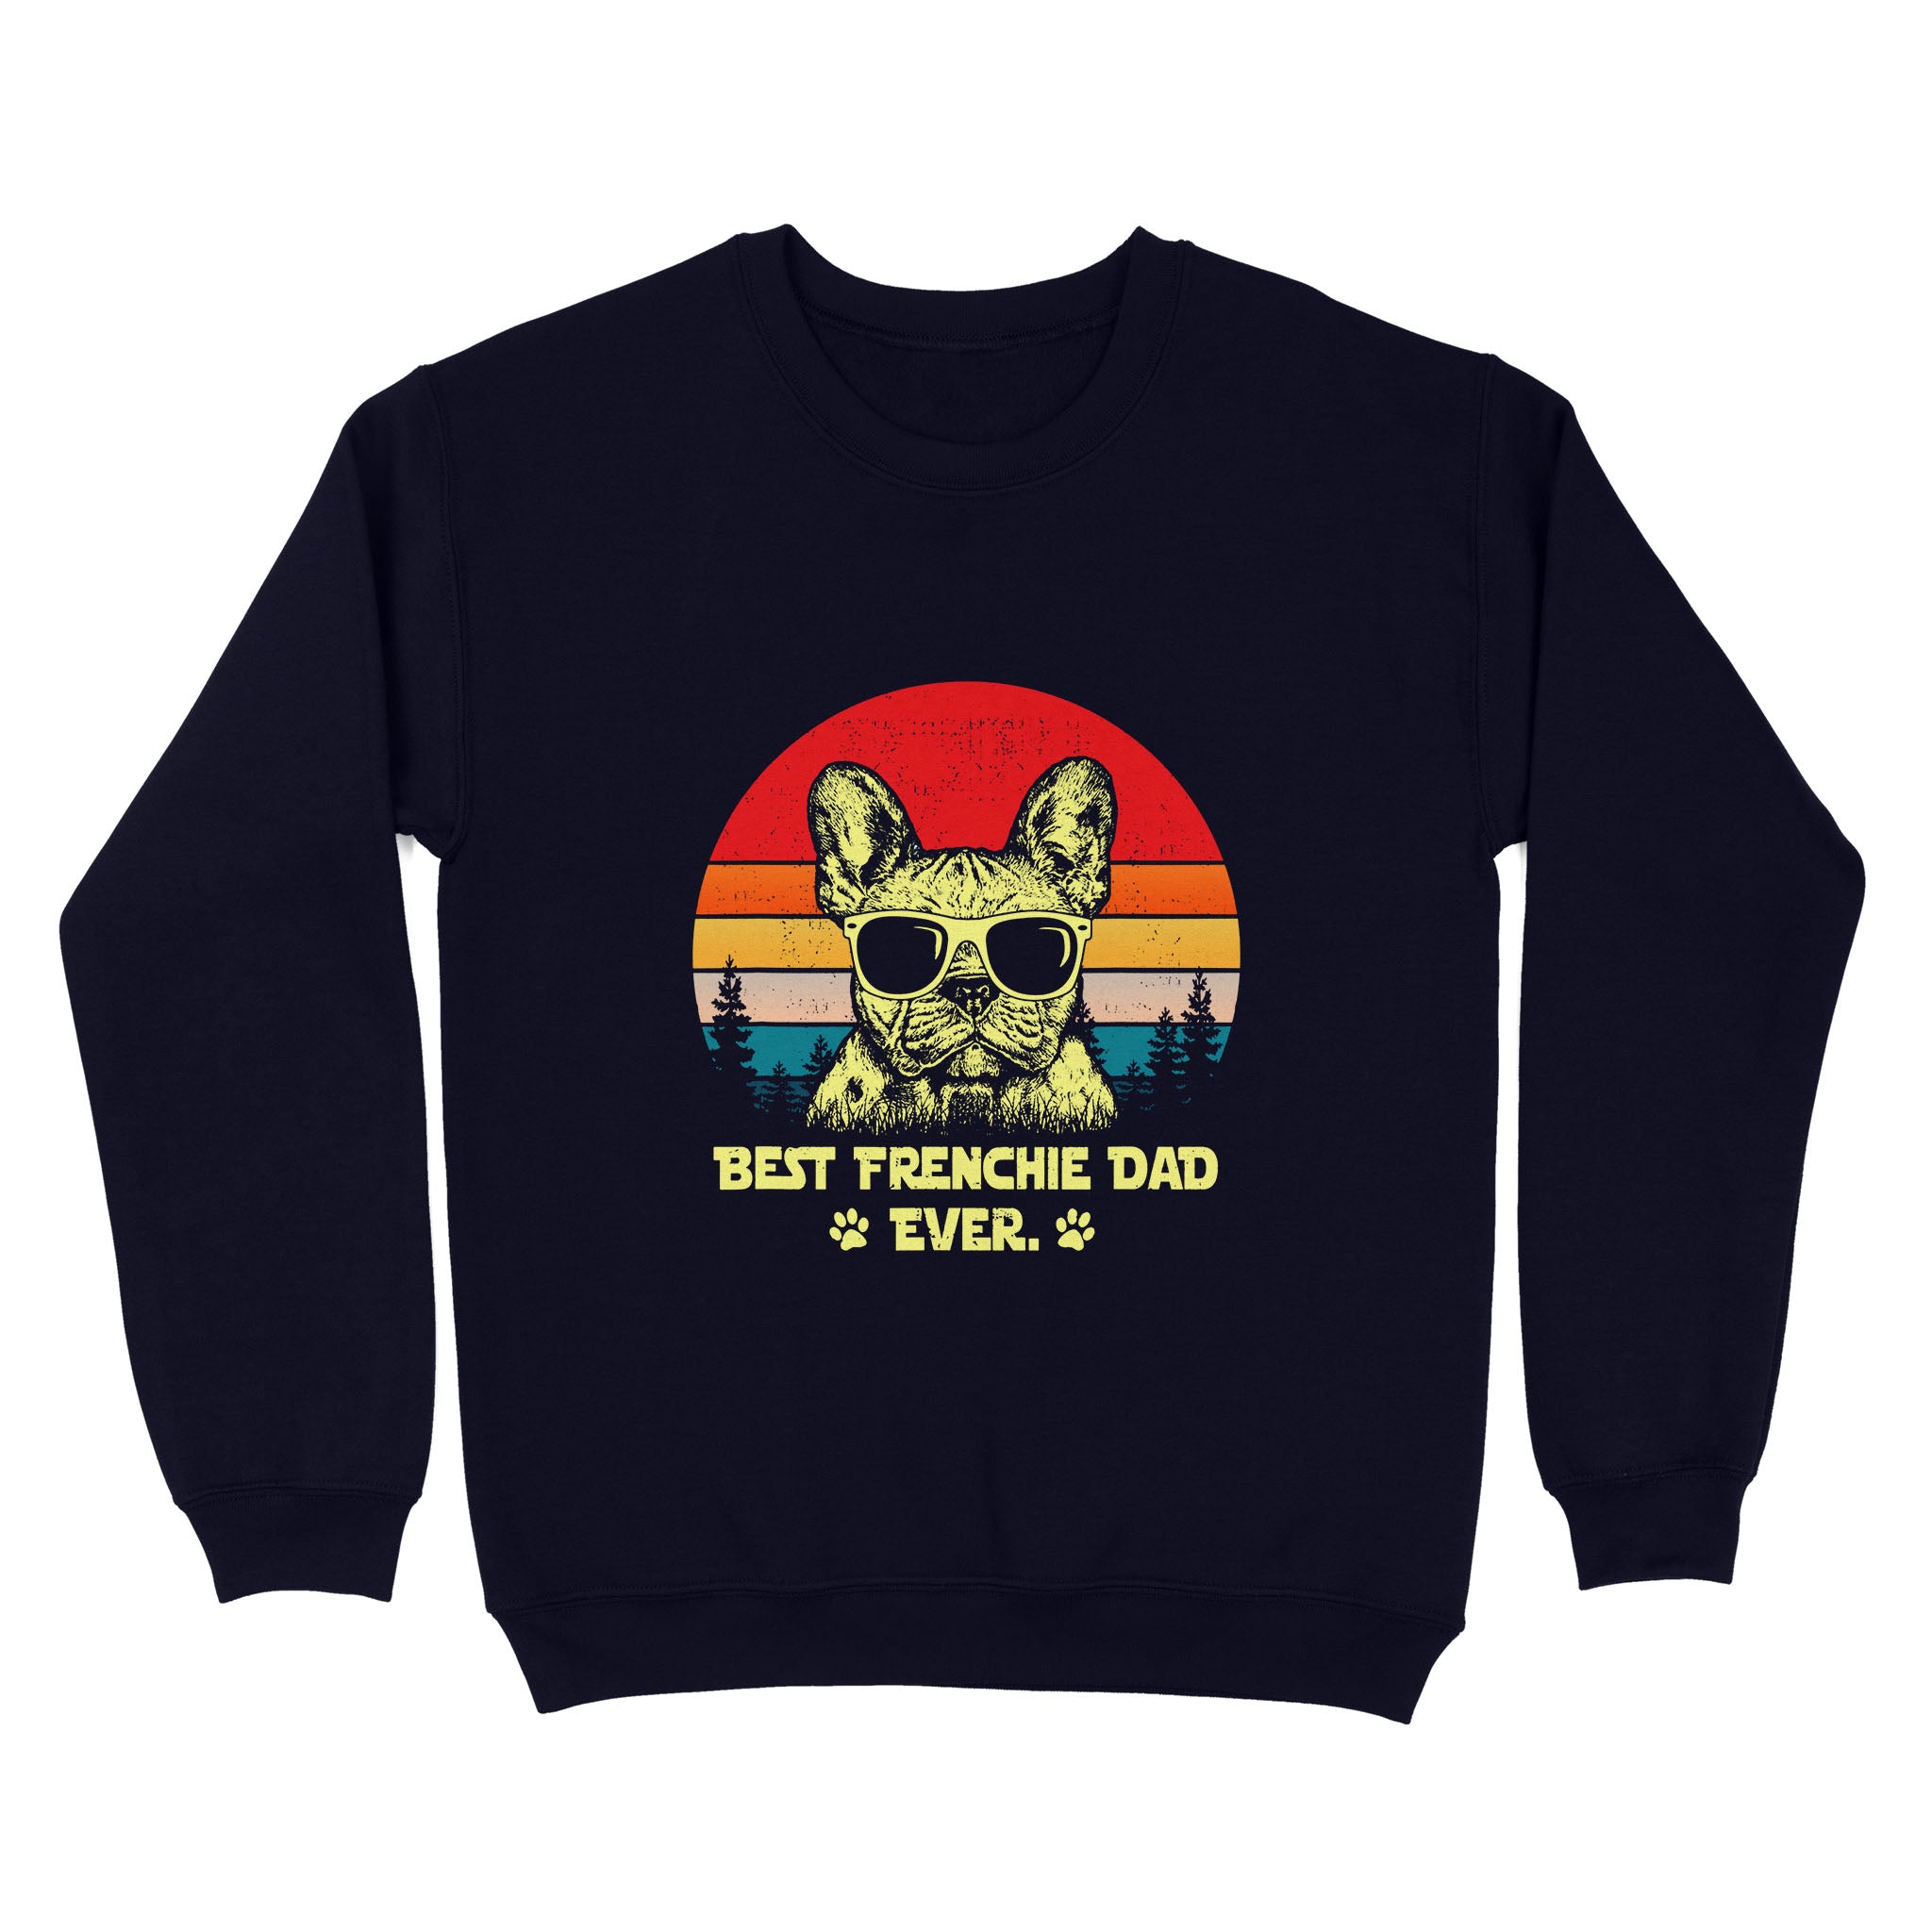 Retro Gift For Frenchie Lover - Best Frenchie Dad - Standard Crew Neck Sweatshirt